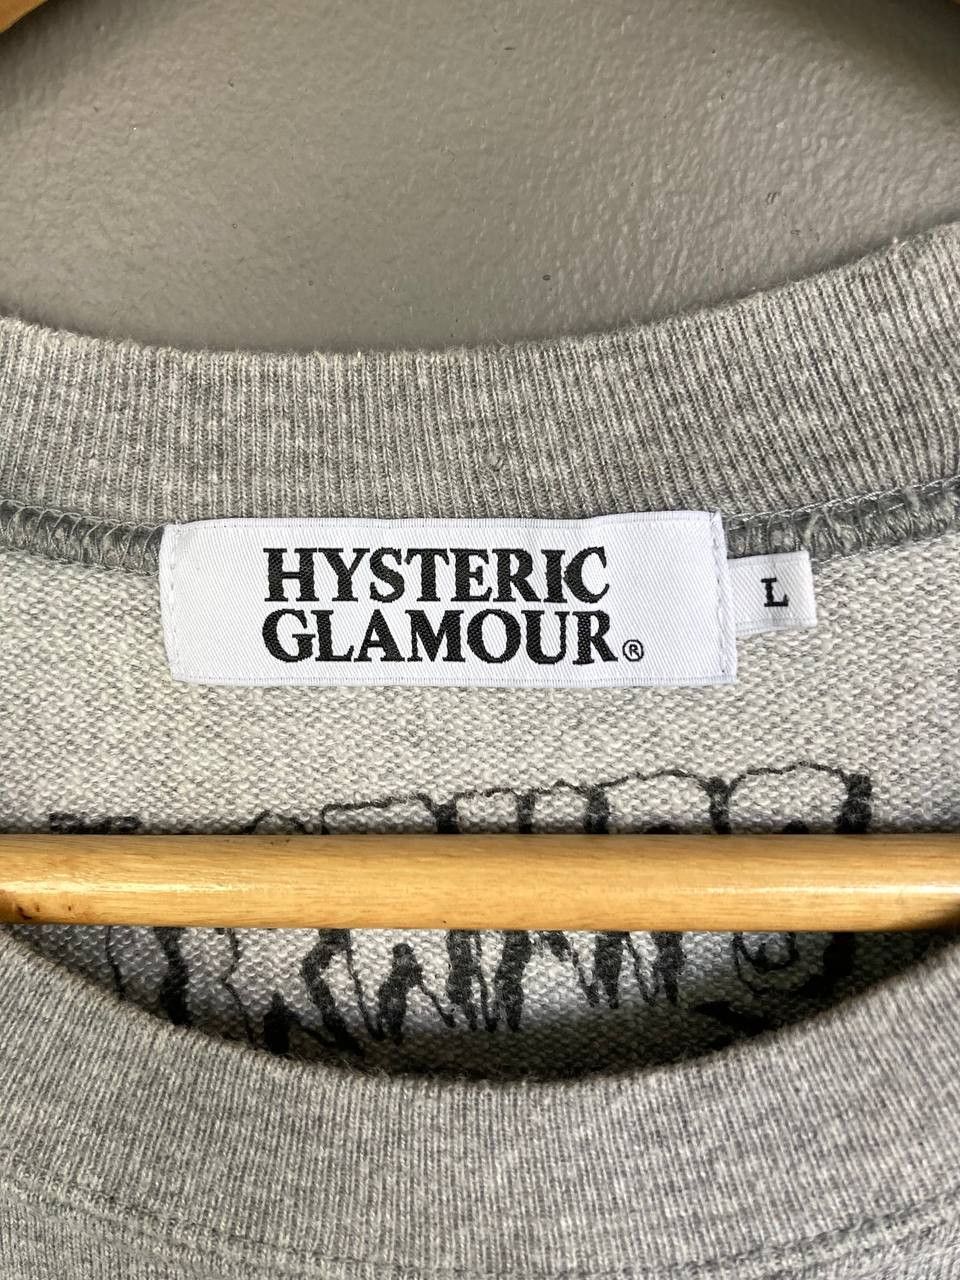 Hysteric Glamour x The Cramps Short Sleeve Sweatshirt - 8